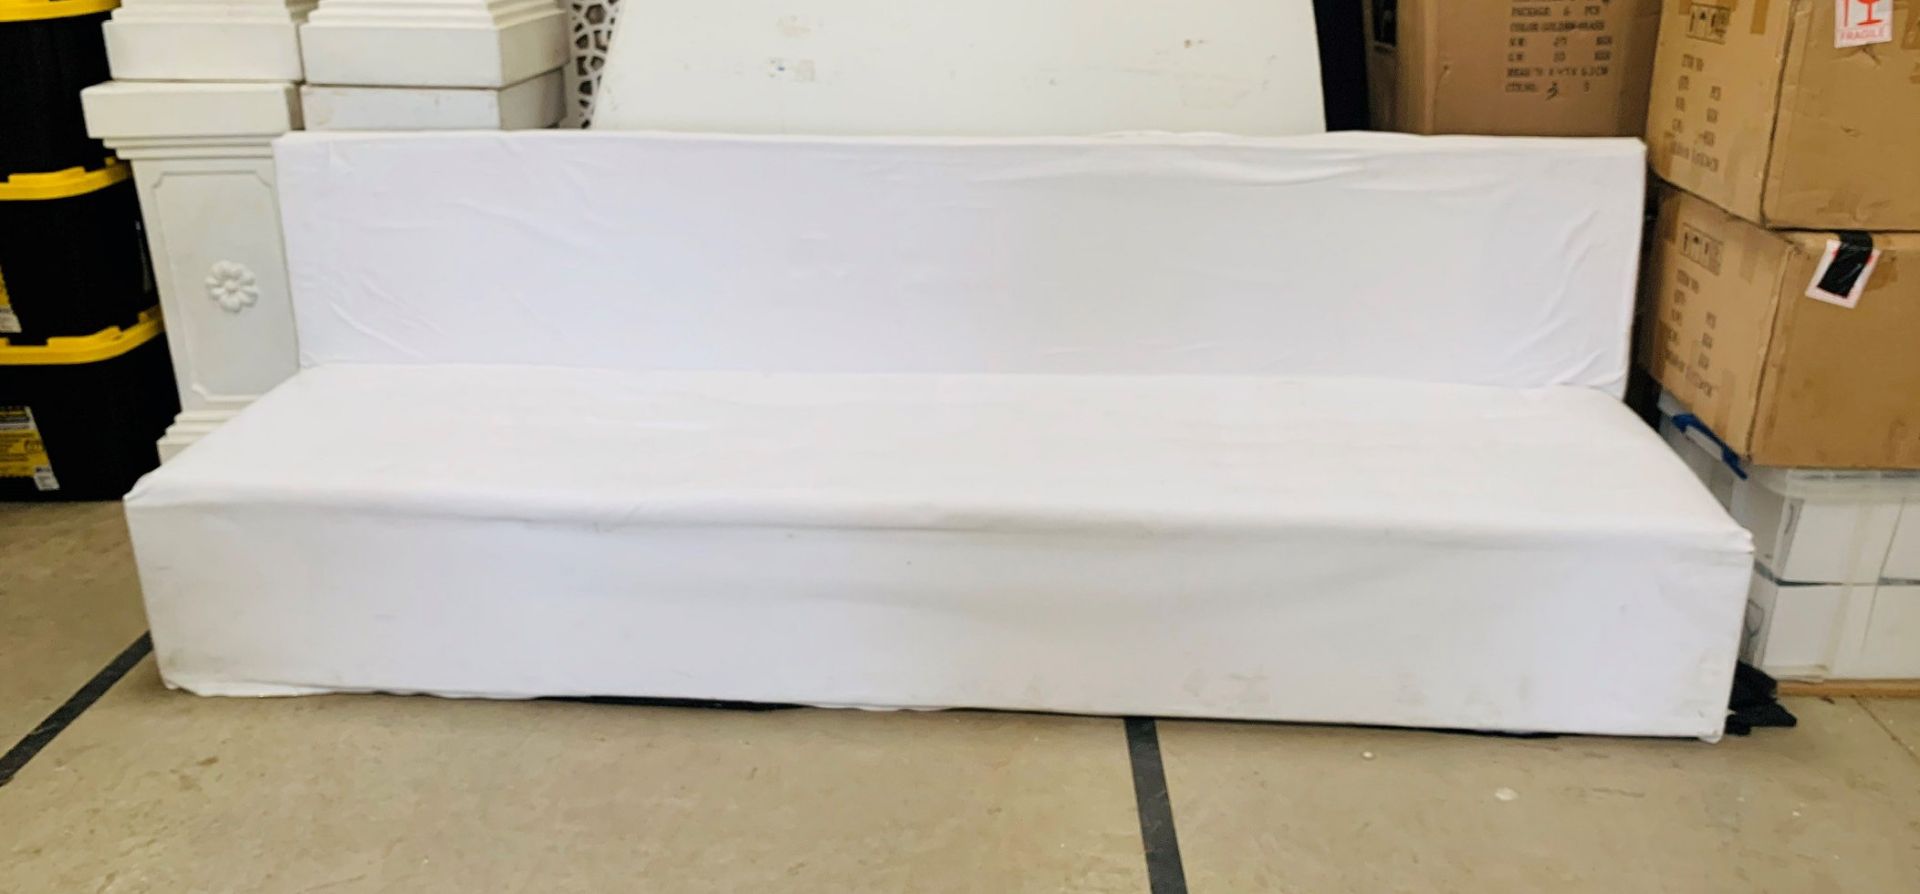 1 x White Banquette Seat - Dimensions: 244cm (l) x 80cm (h) - Pre-owned - CL548 - Location: Near Mar